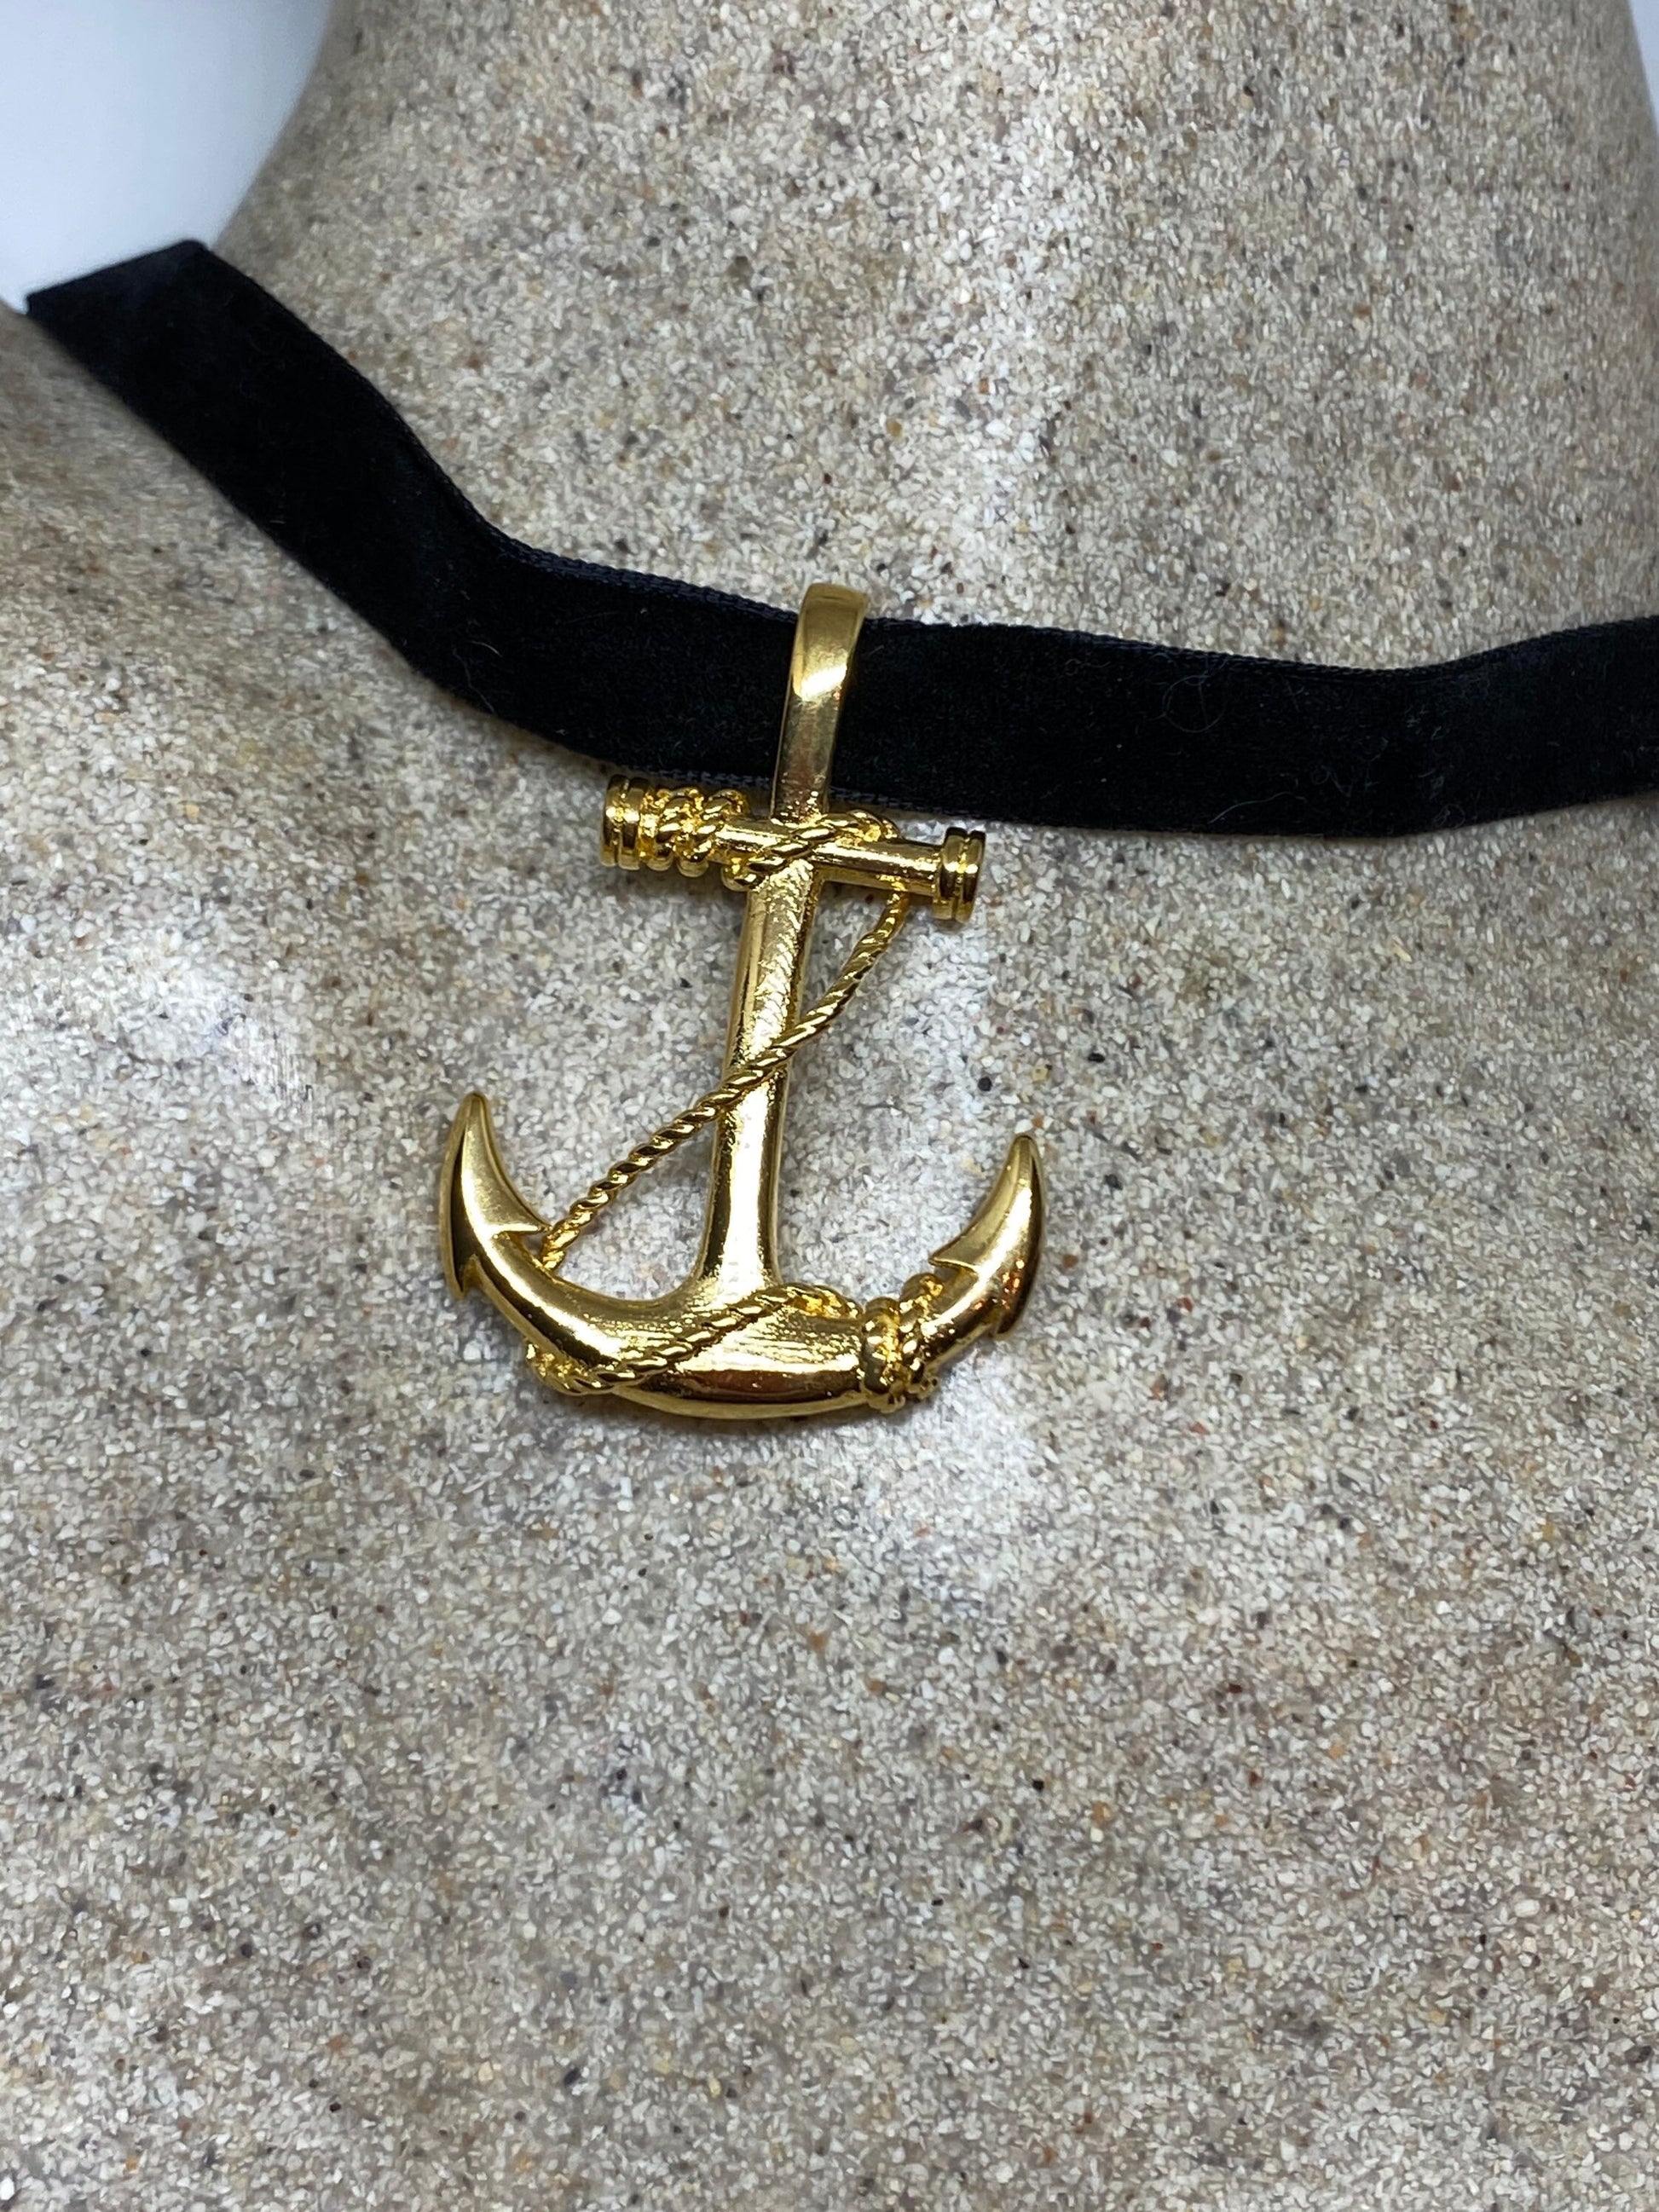 Vintage Celtic Golden Stainless Steel Anchor Pendant Necklace